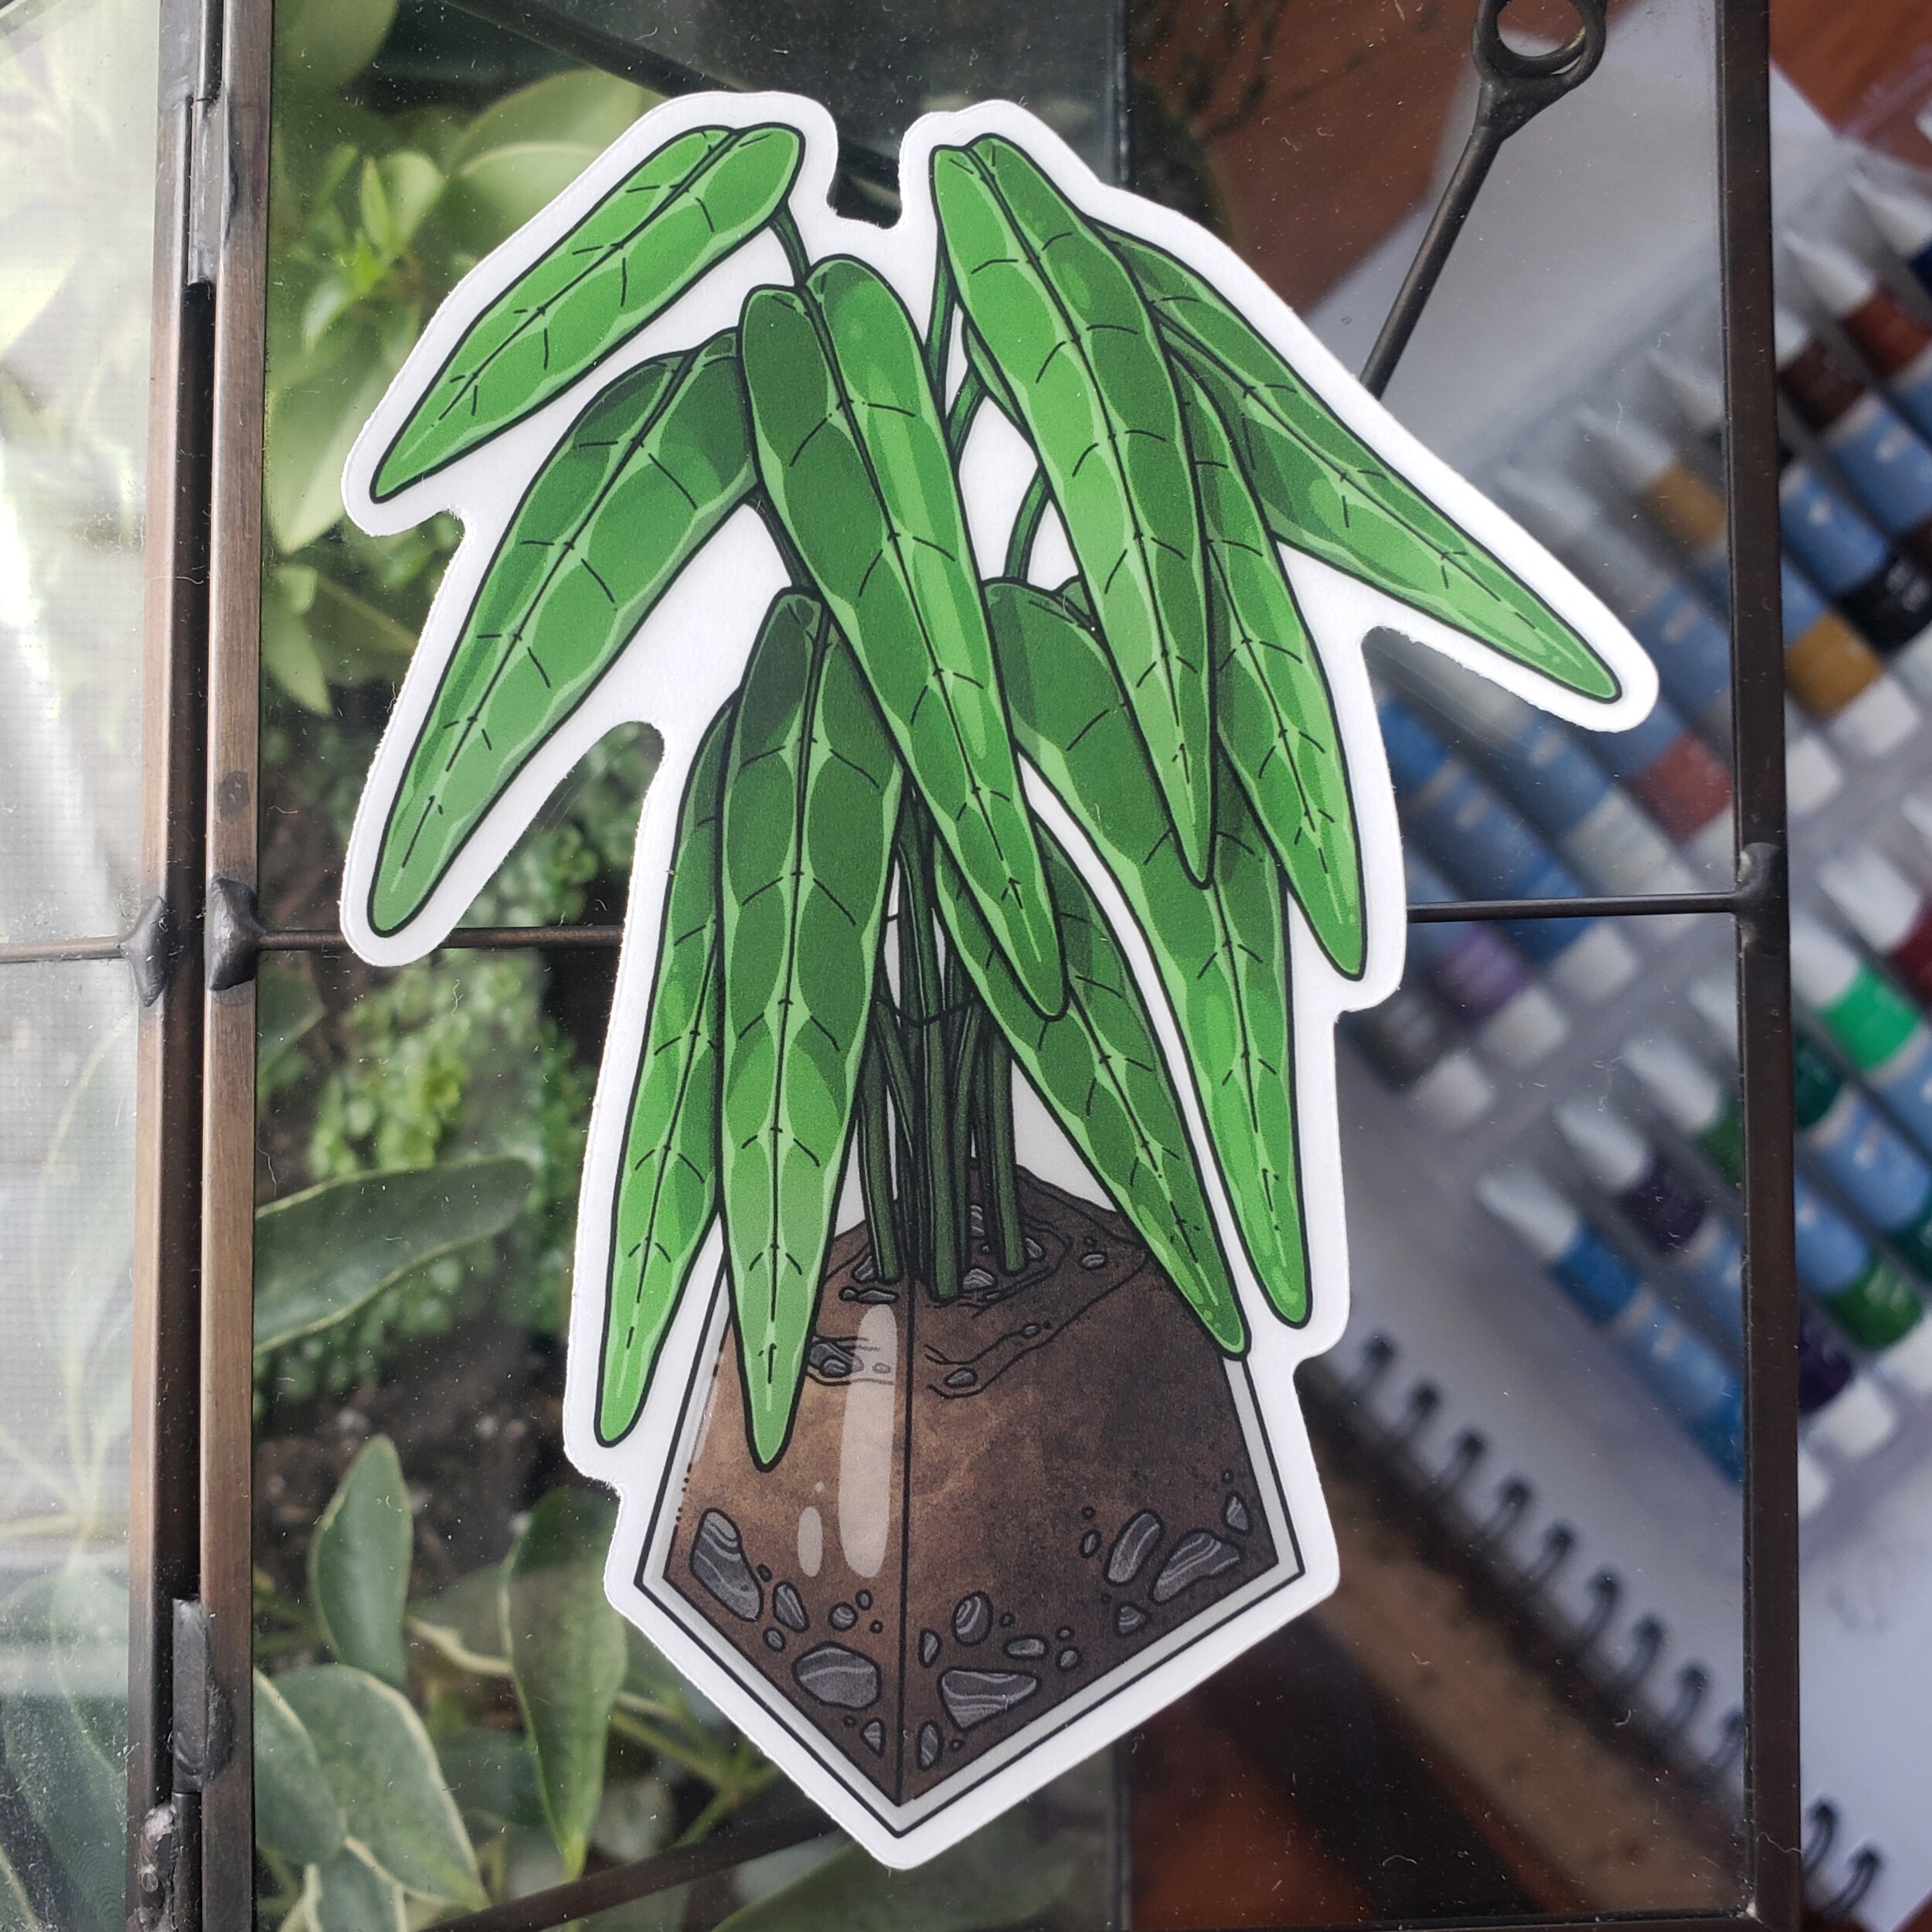 Queen Anthurium Botanical Tarot Sticker – Yaga Botanica